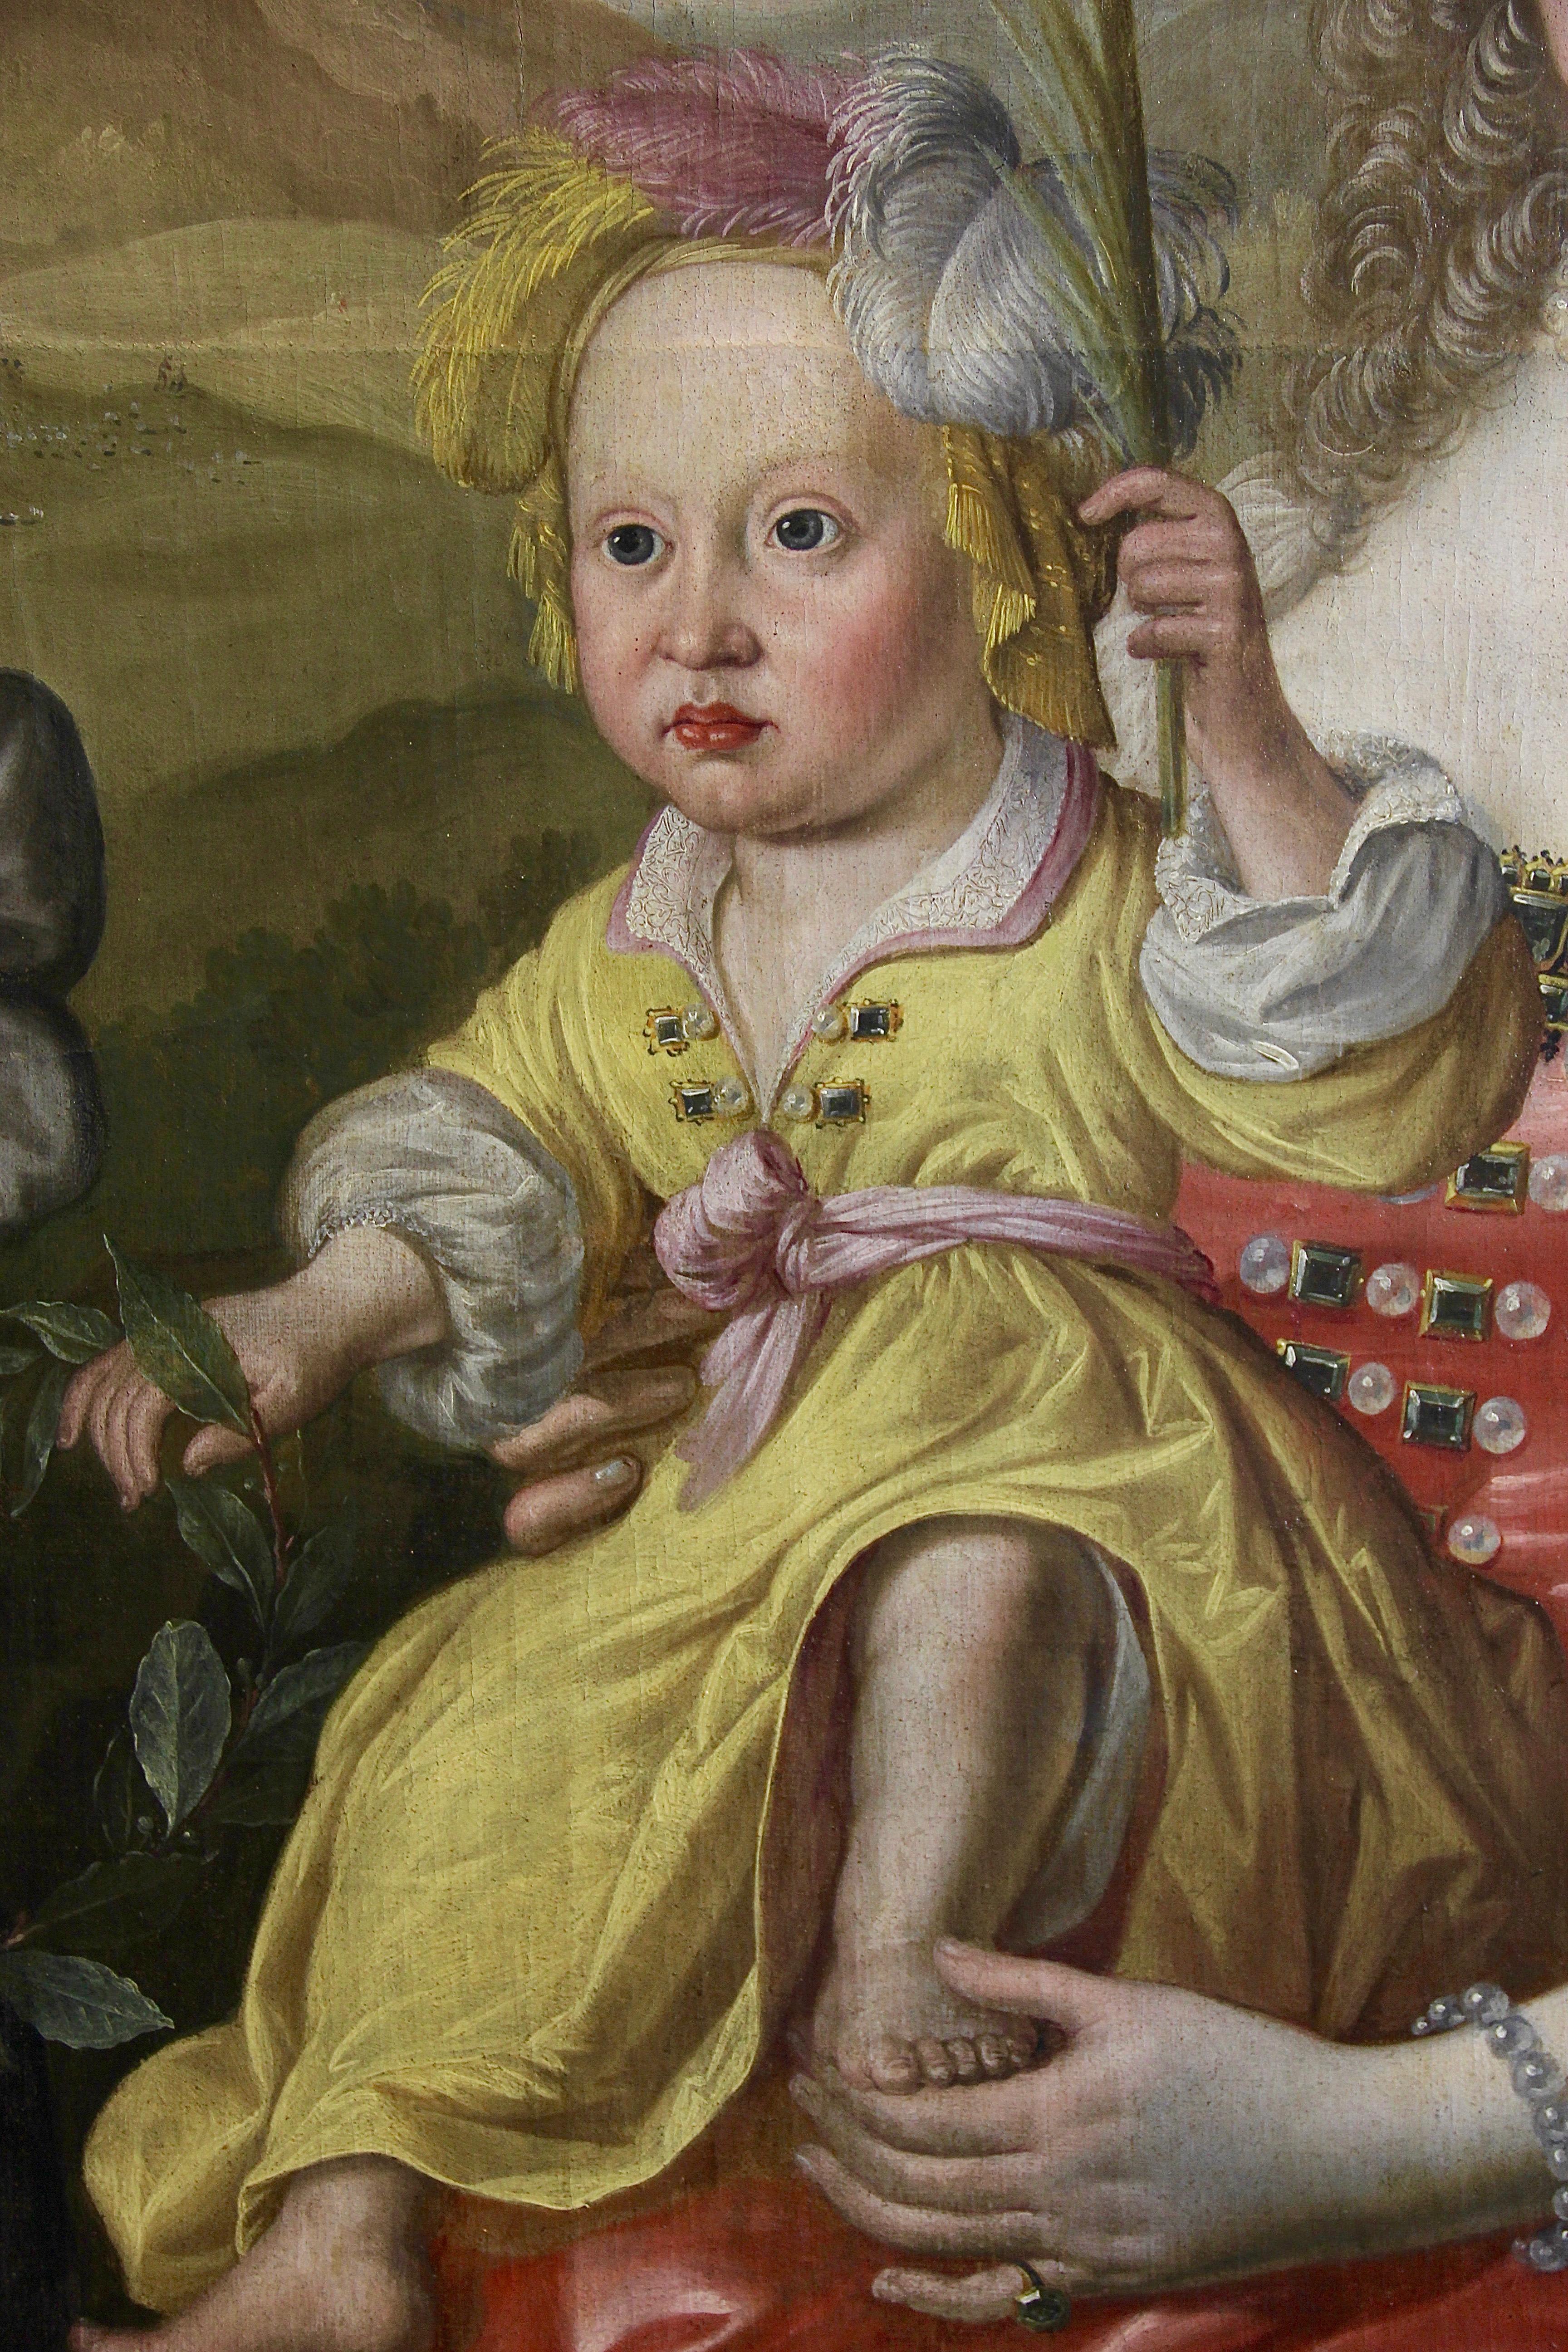 SIMON PETER TILEMANN, Family Portrait, 1658, Old Master. Baroque Rococo Painting - Brown Portrait Painting by Simon Peter Tilemann